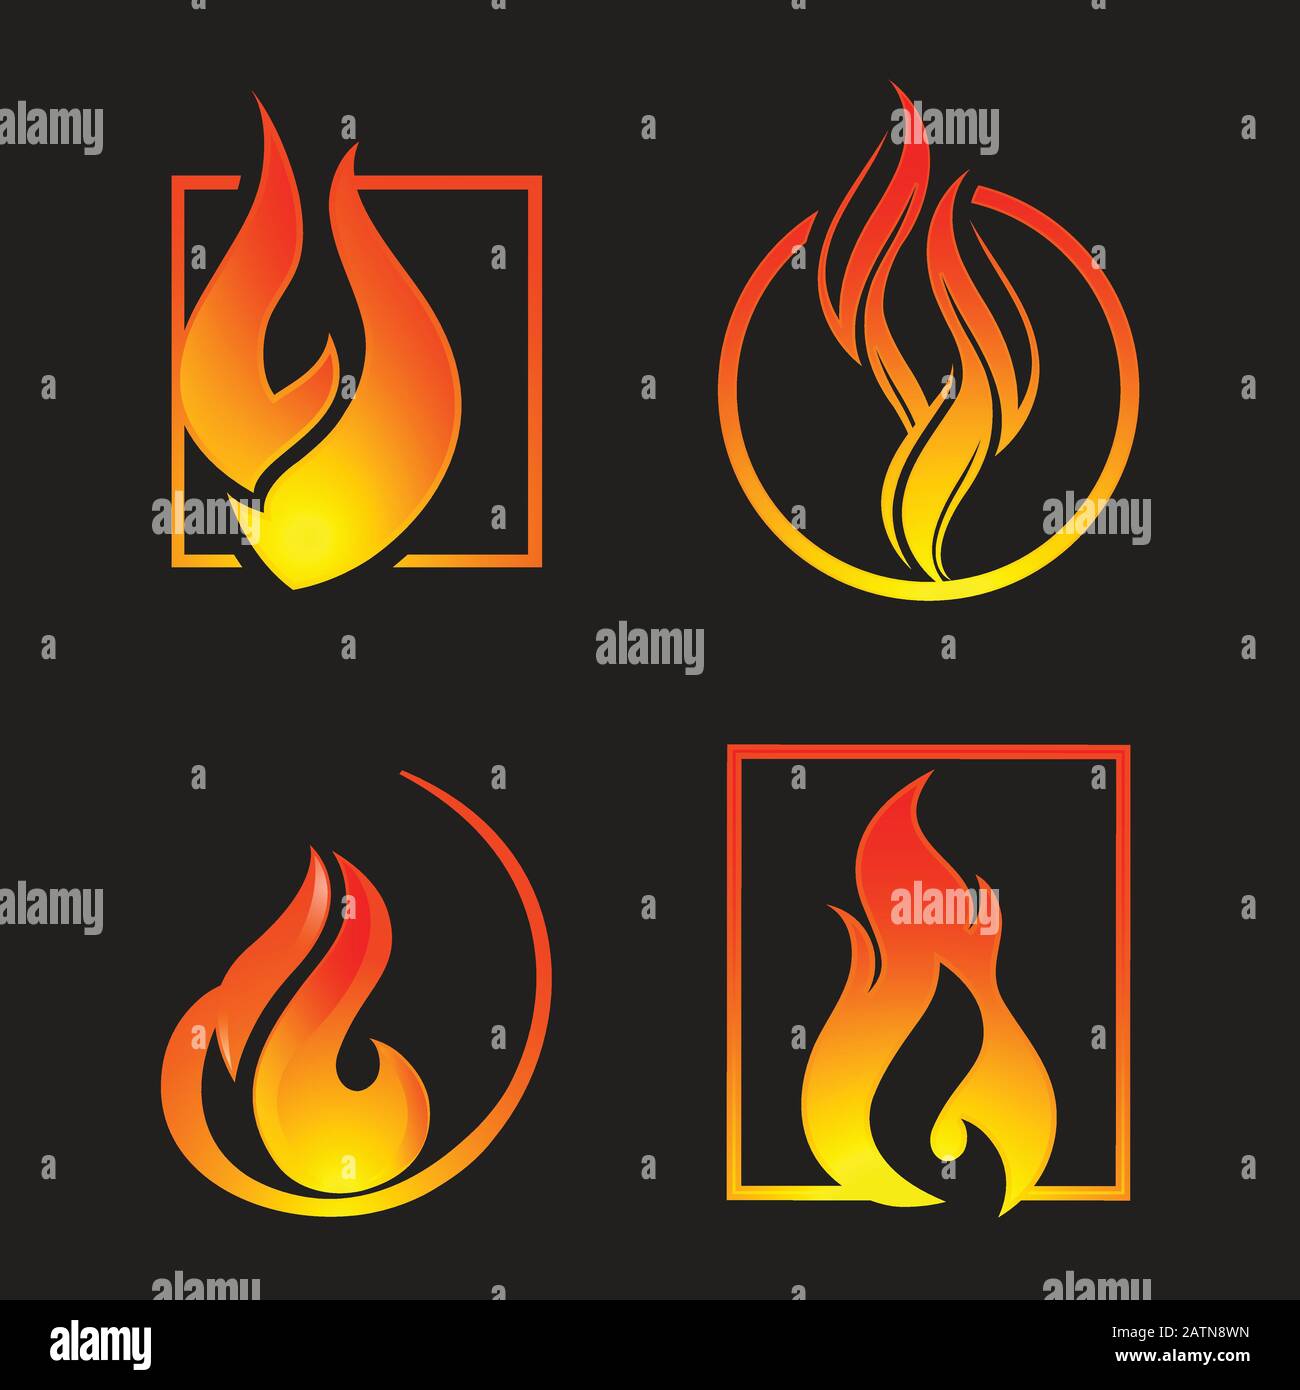 Simple light creative dangerous energy flame burns fired symbol isolated vector burning dangers blazing sticker illustration Stock Vector